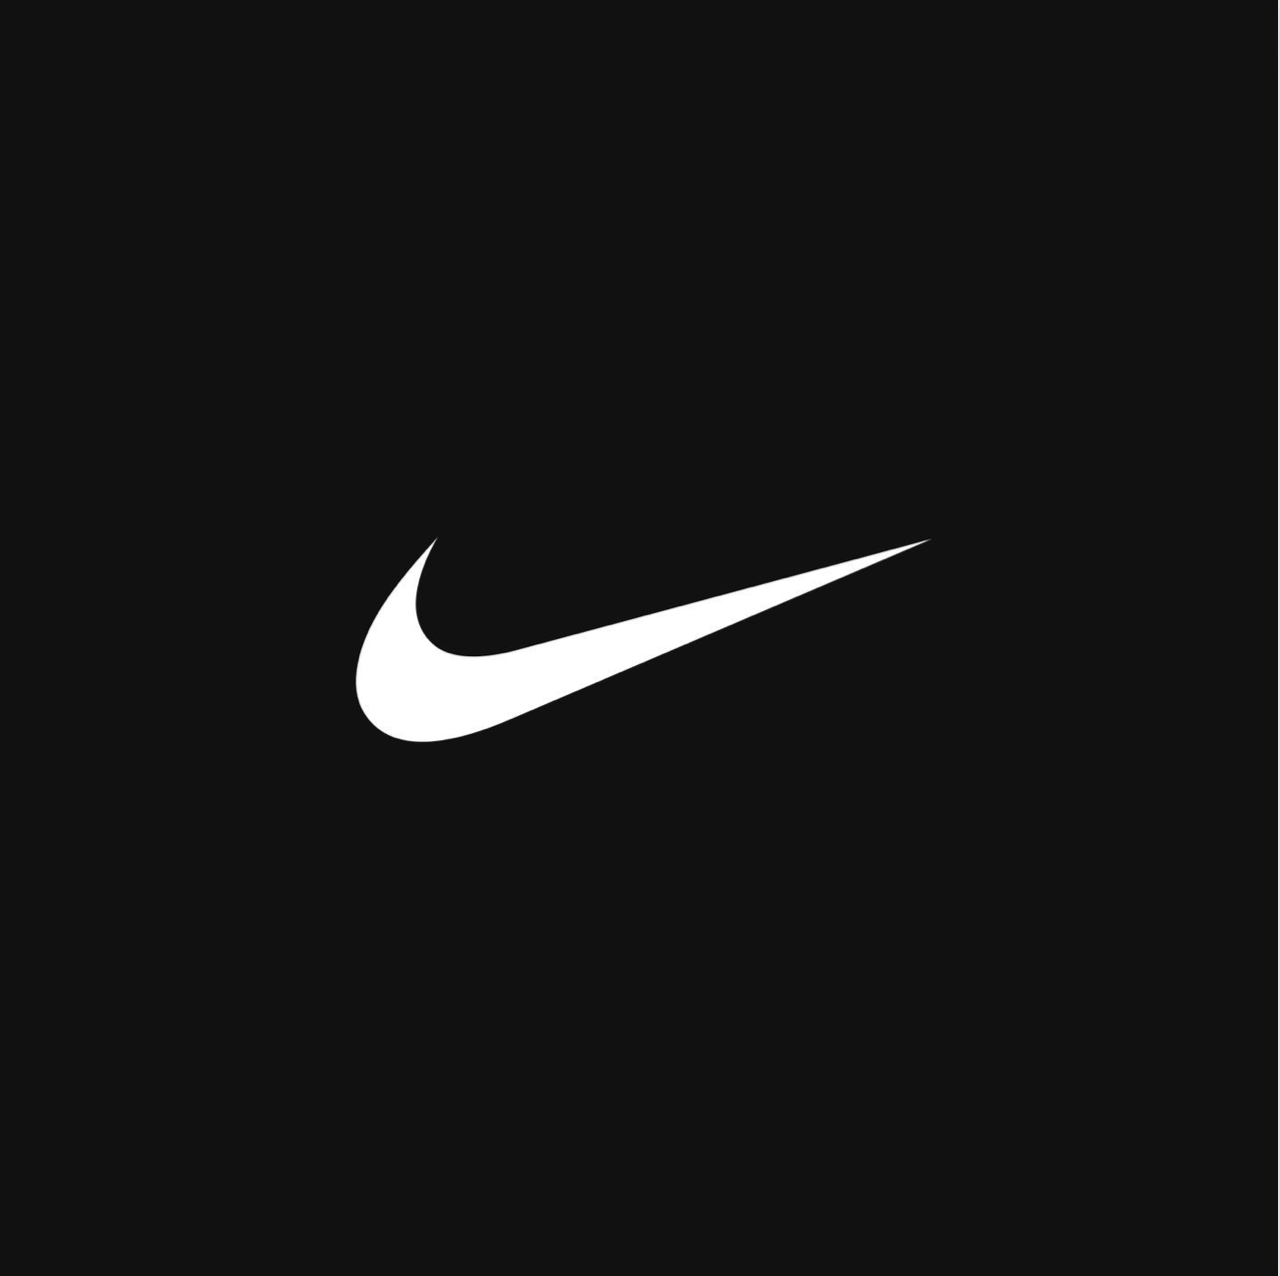 Nike achteraf betalen met Klarna winkels afterpay online betalen achteraf me afterpay